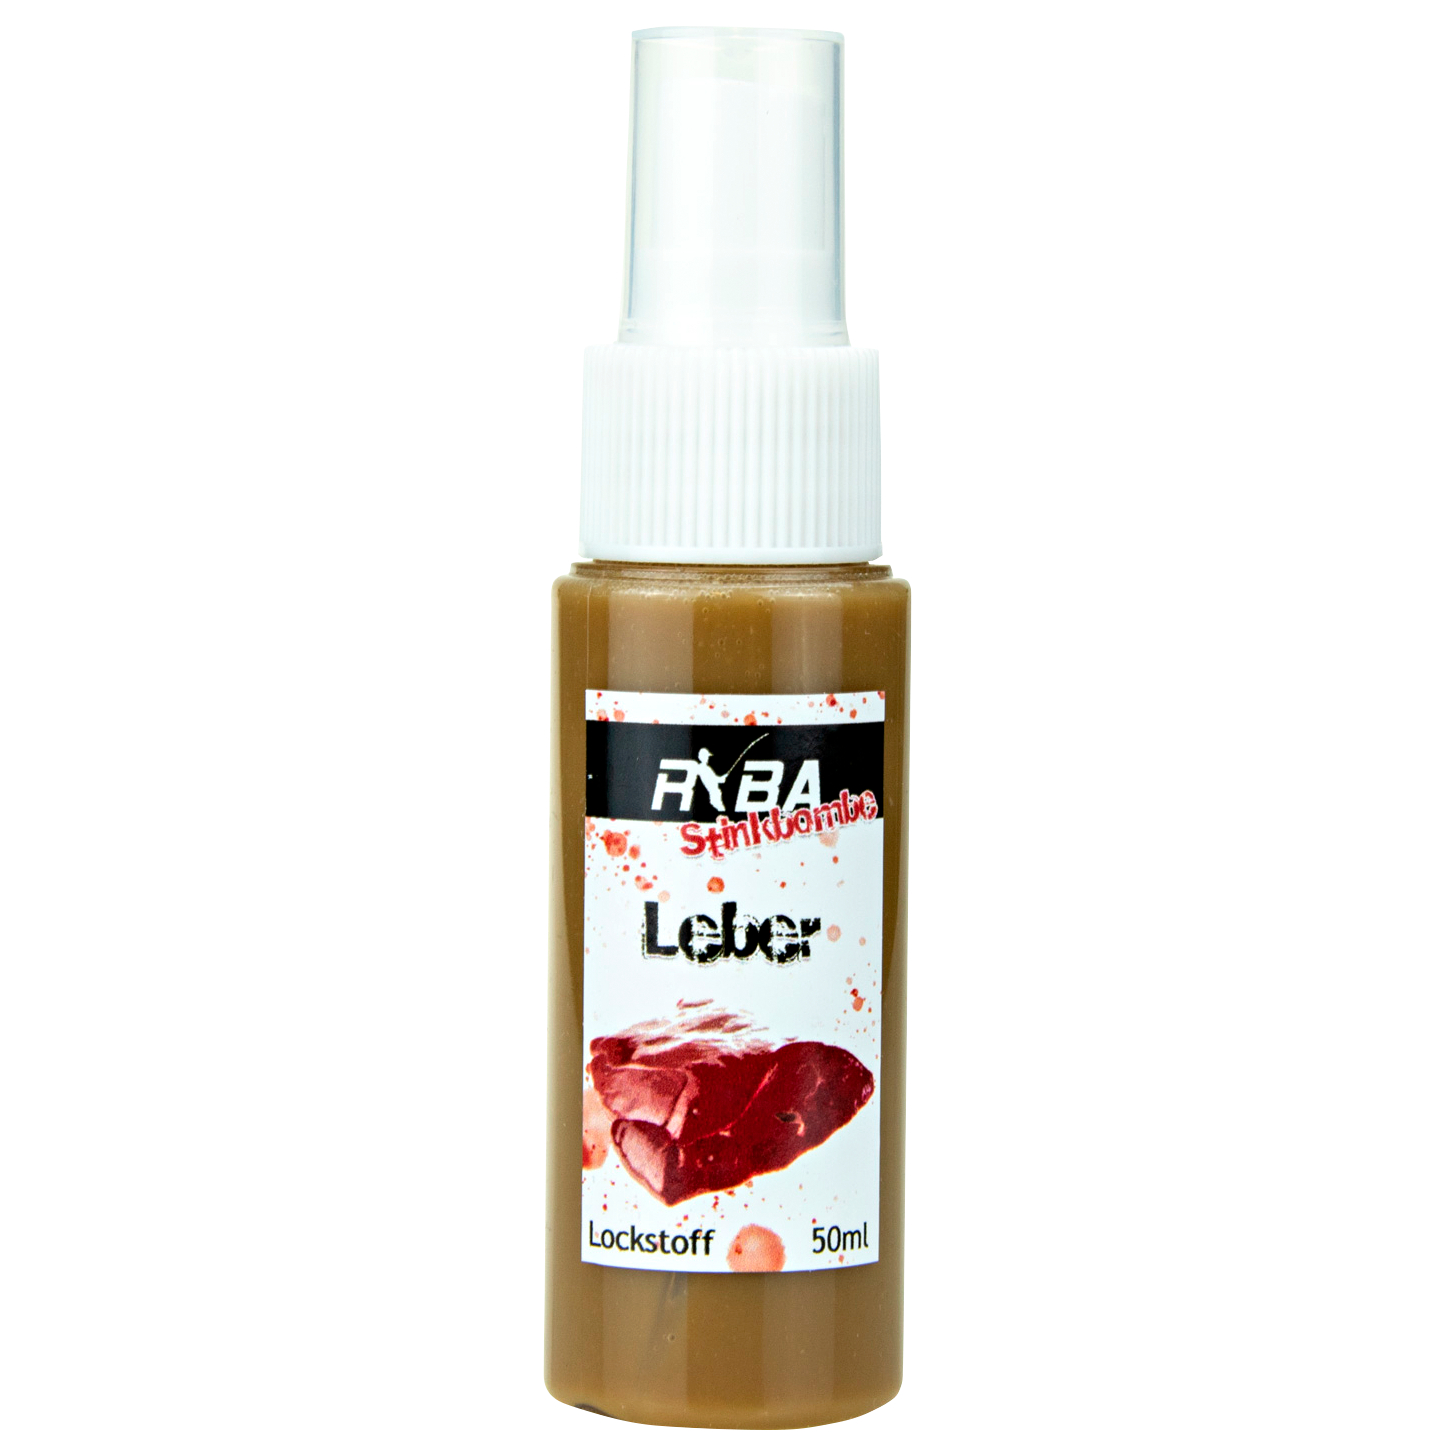 Ryba Attractant Spray Stink Bomb (liver) 